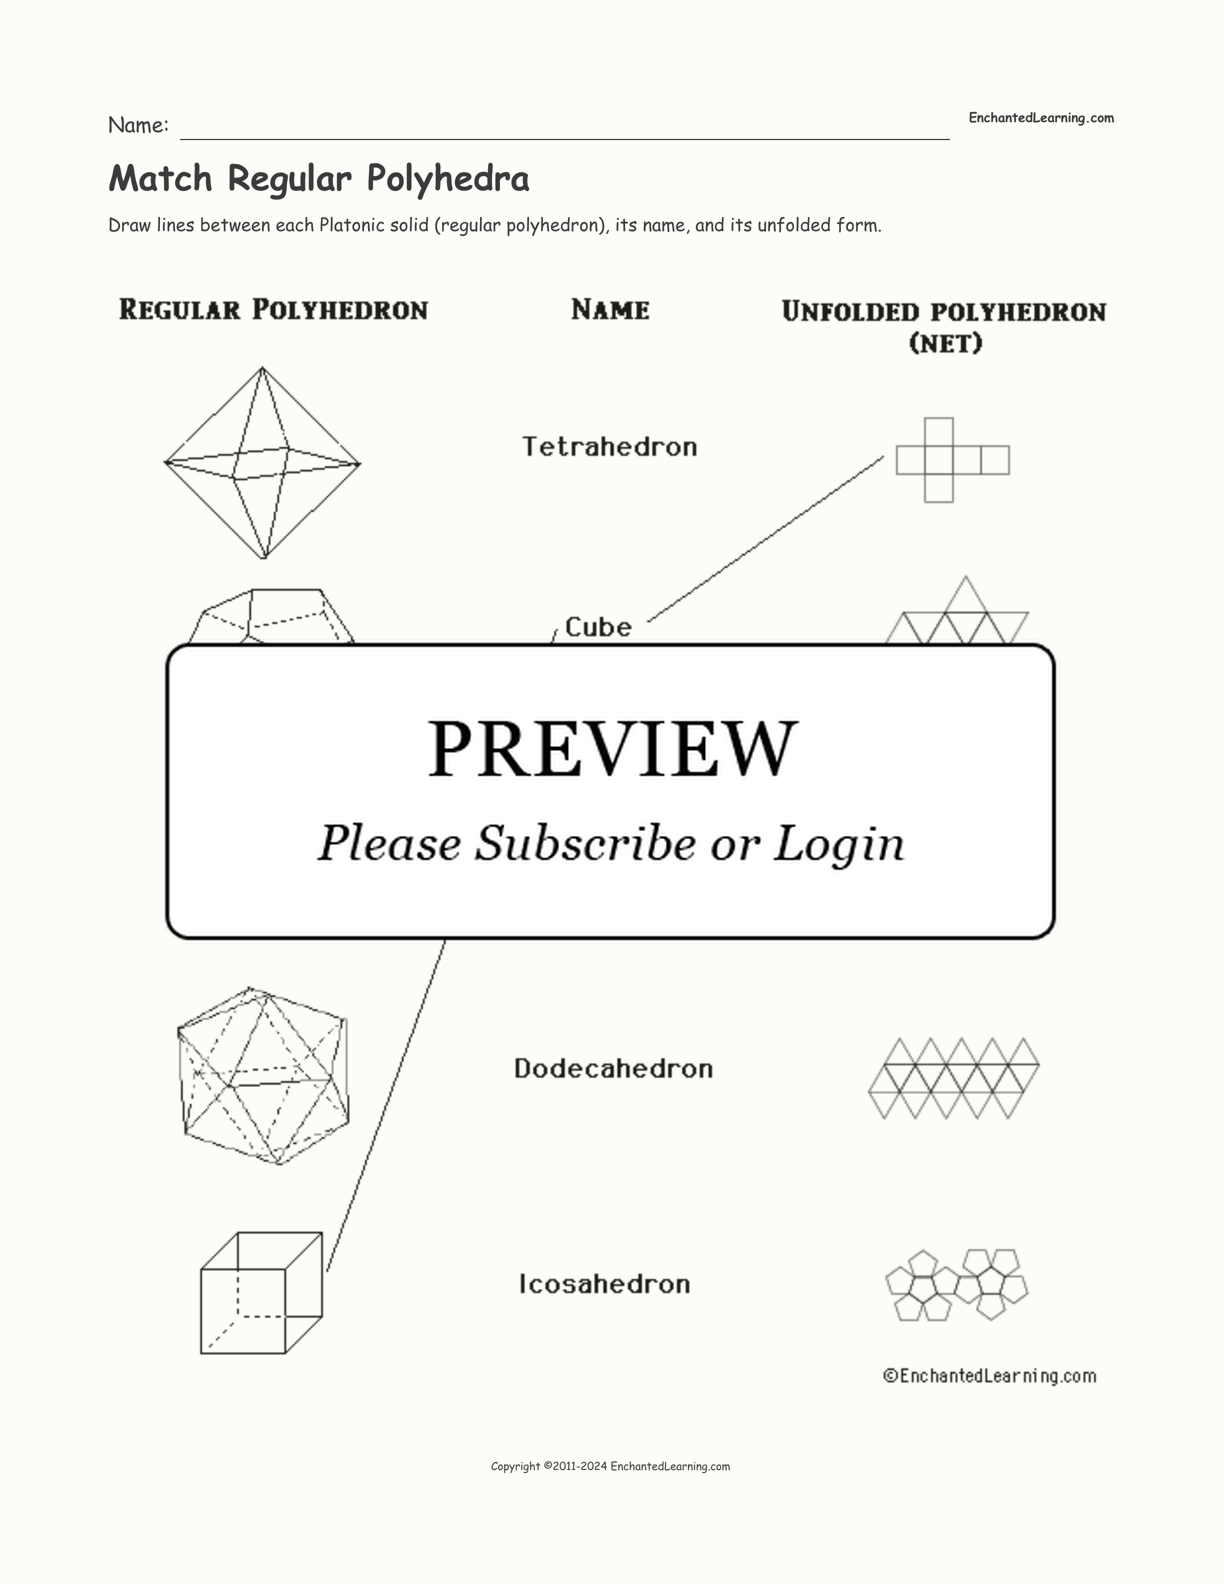 Match Regular Polyhedra interactive worksheet page 1